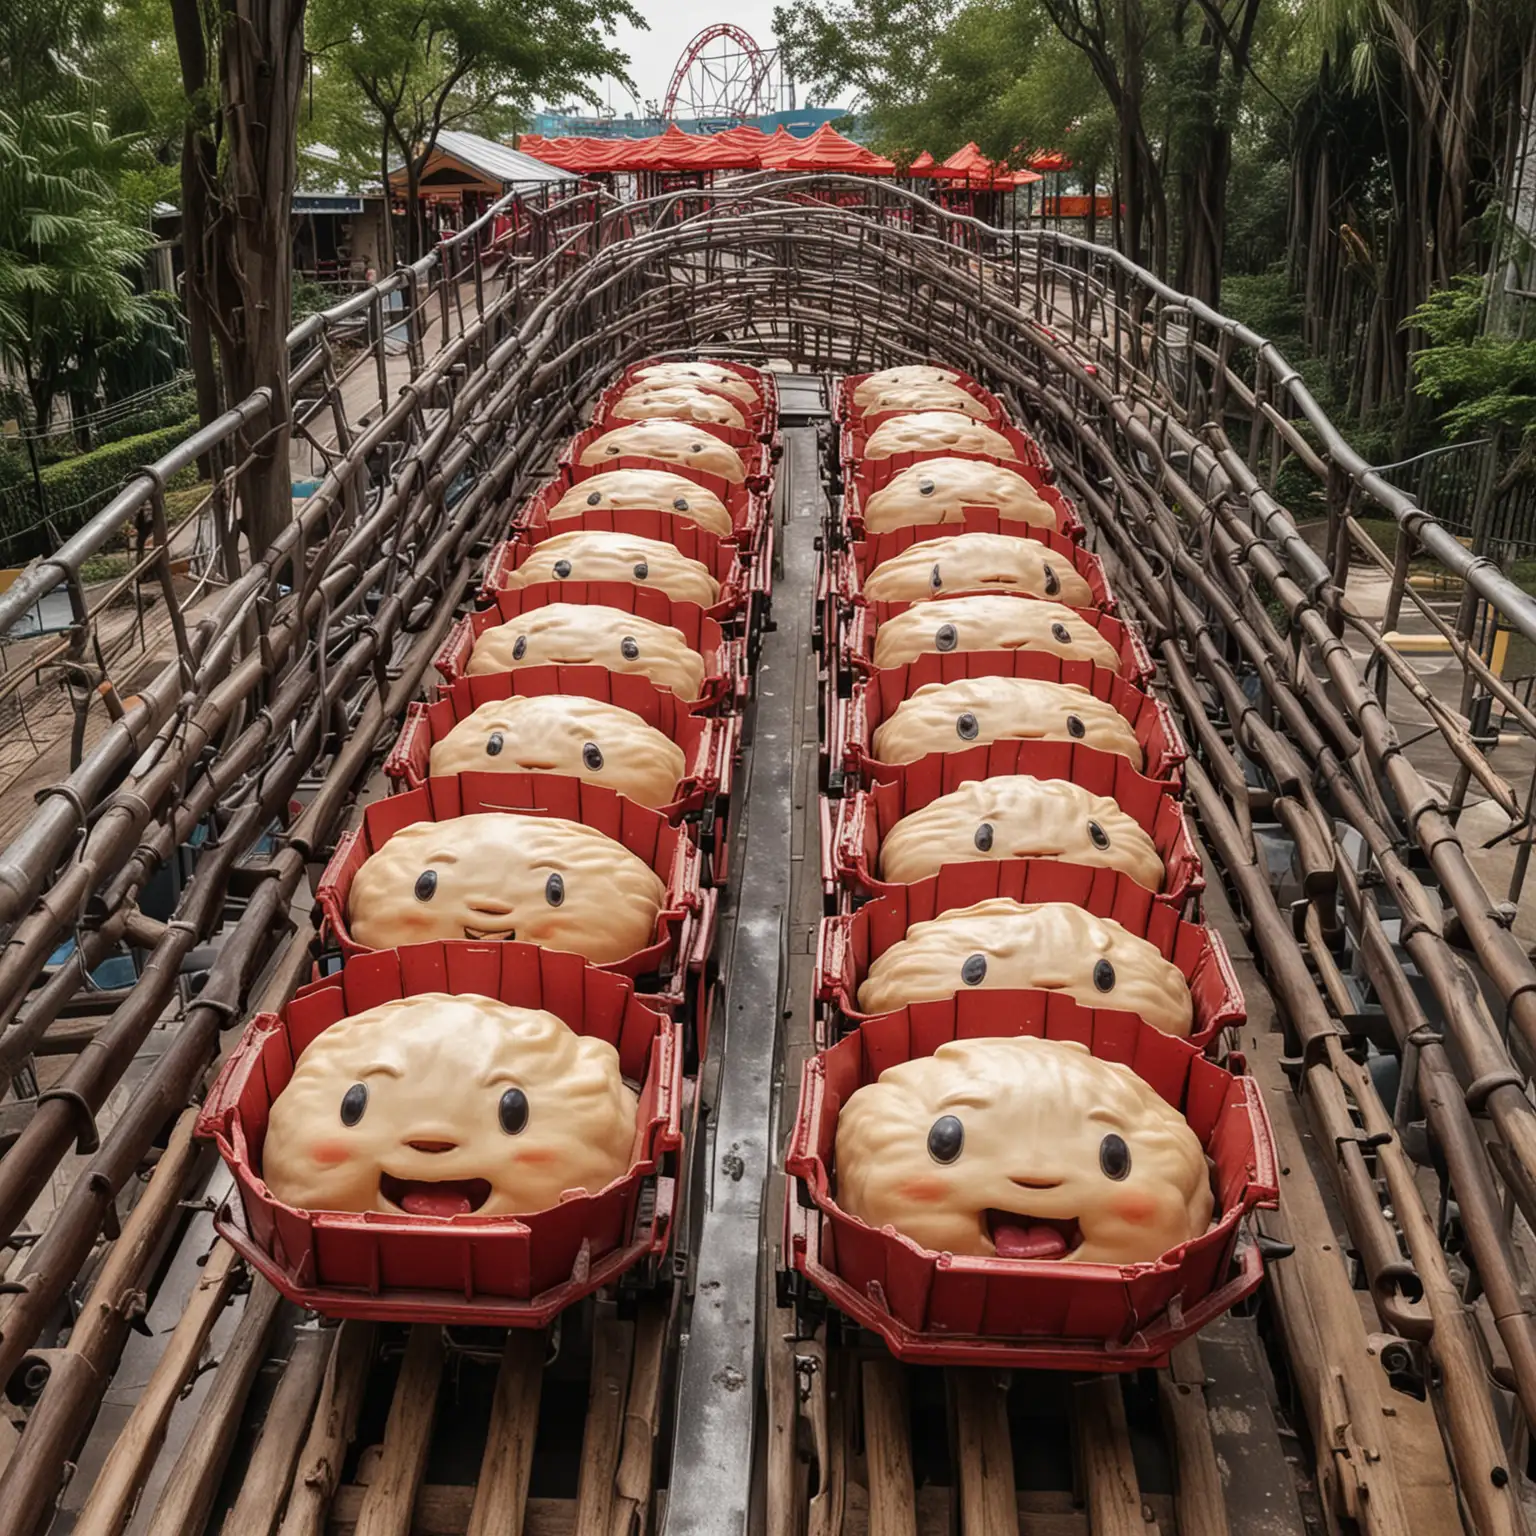 Amusement Park Rollercoaster with Giant Char Siu Bao Carts